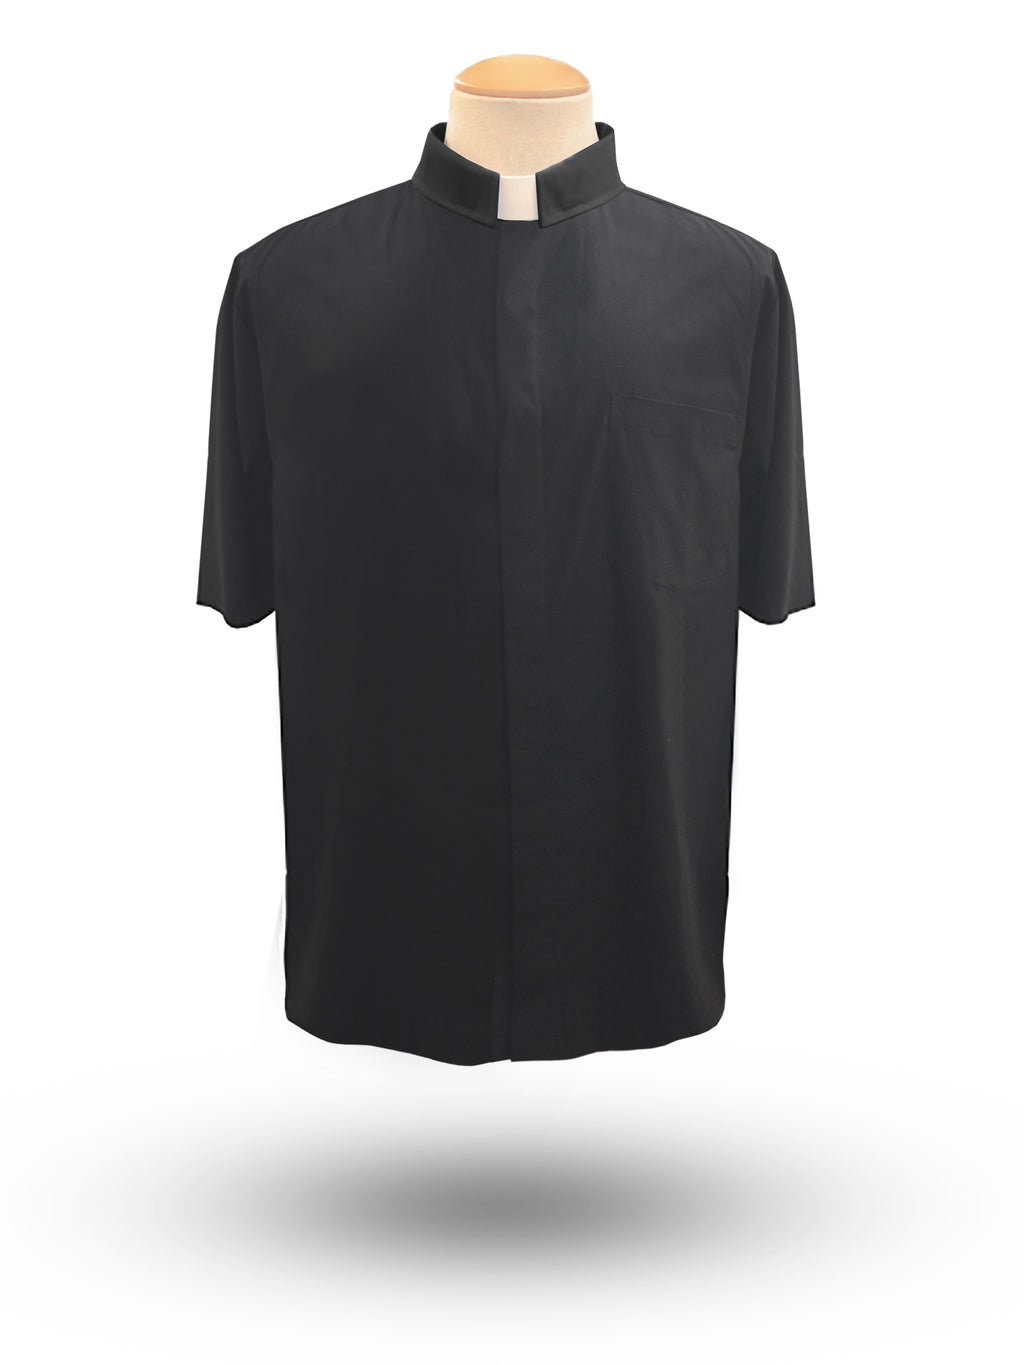 Men's Short Sleeve Tab Collar Clergy Shirt in Black